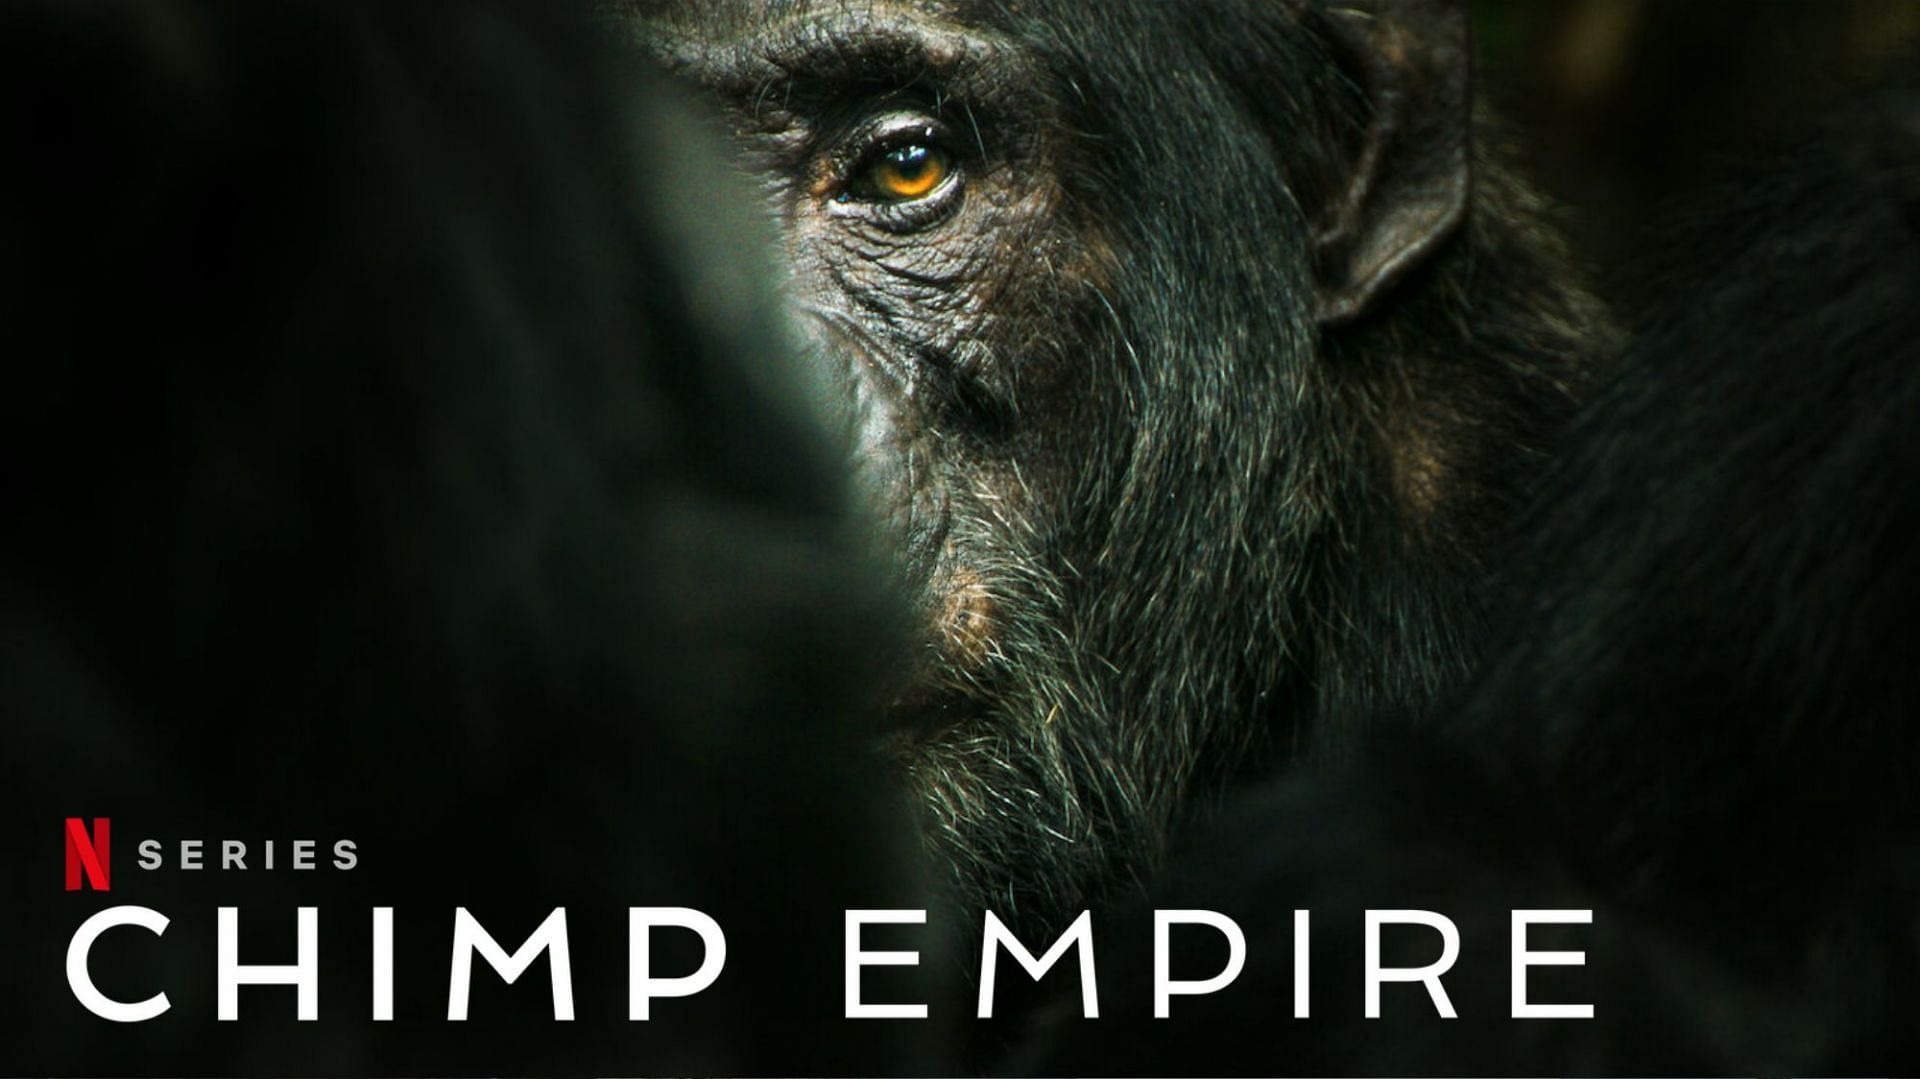 Chimp Empire (Image via Sportskeeda)